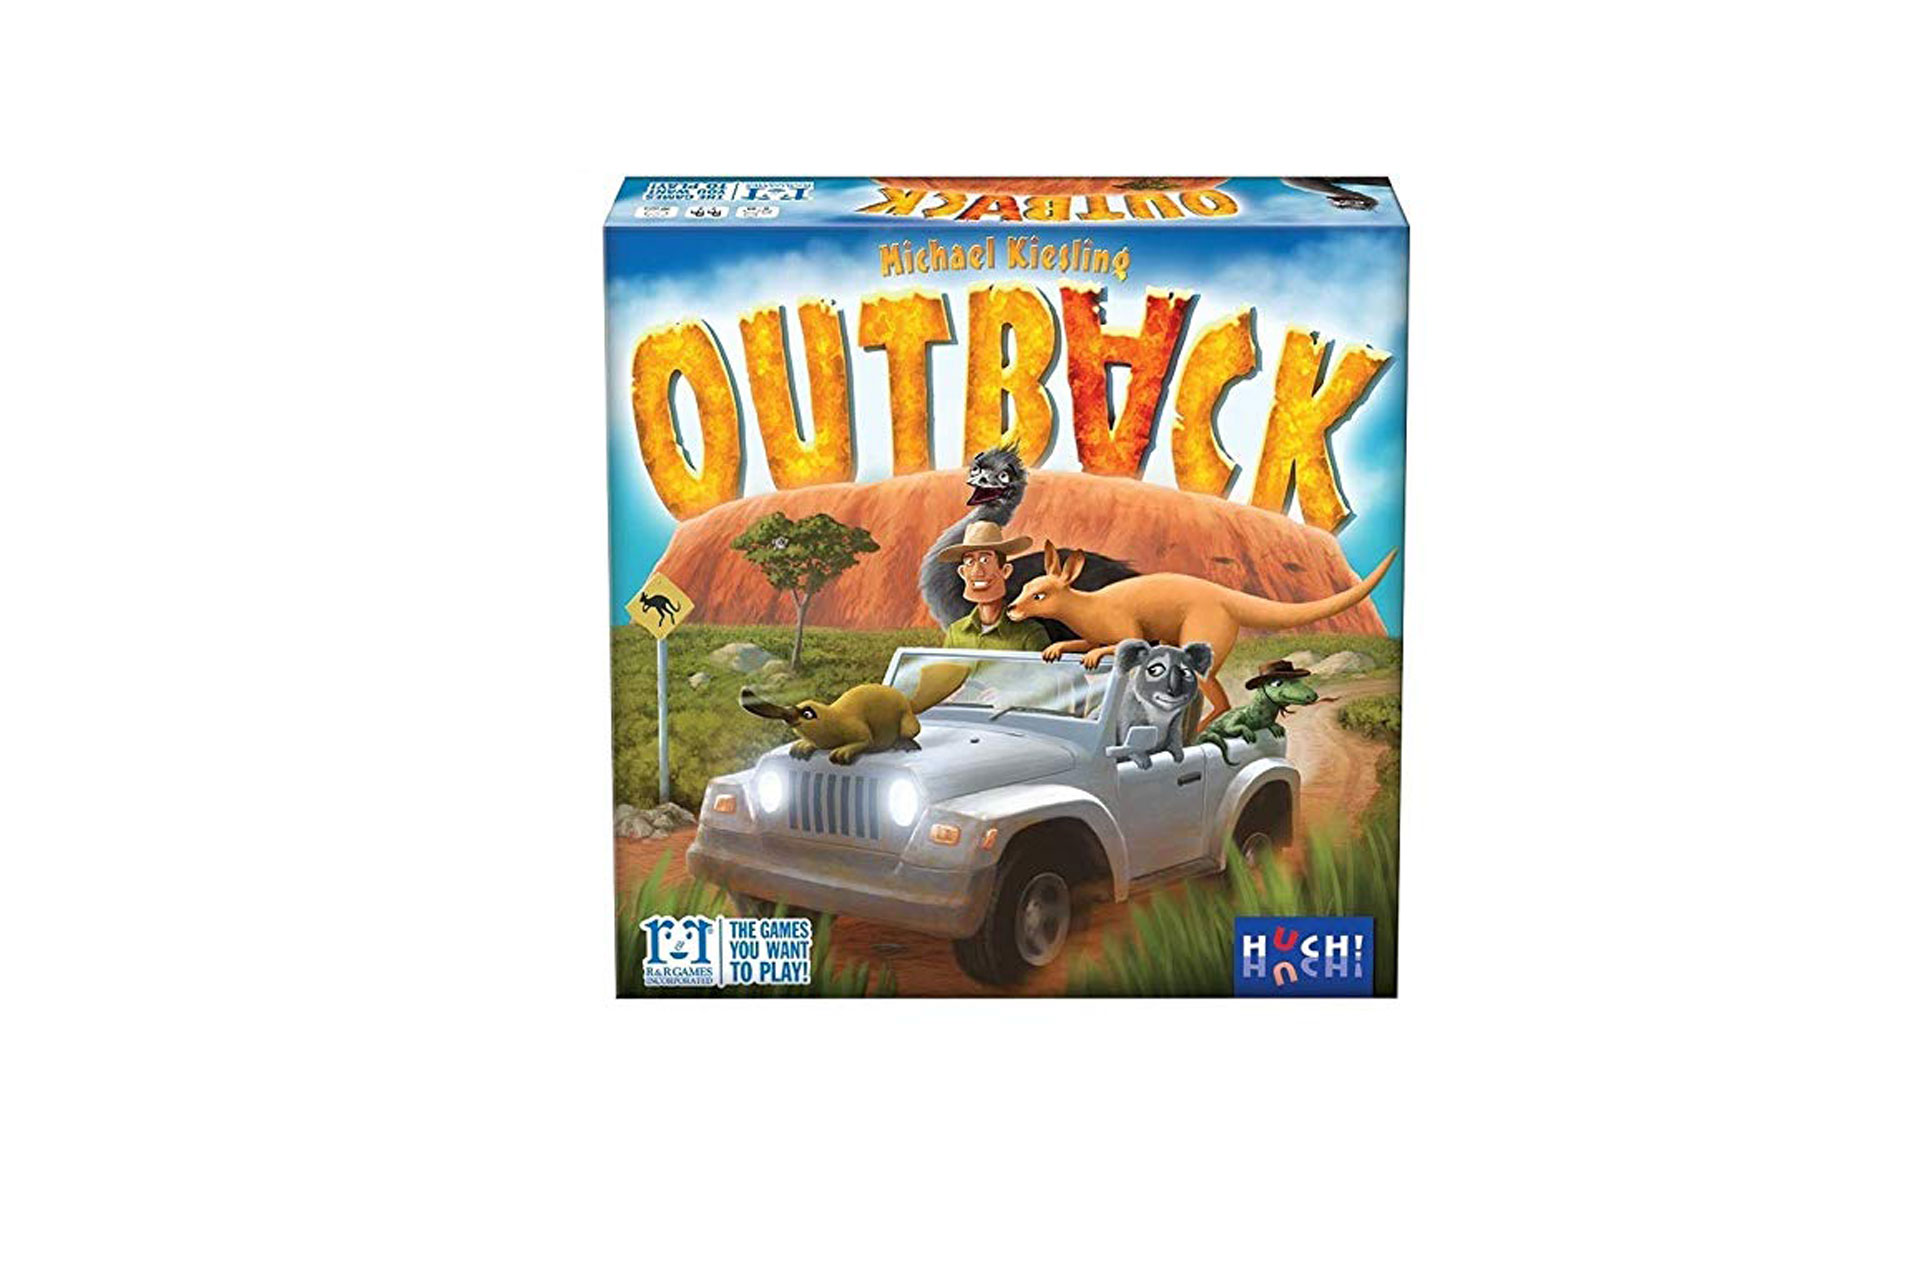 Outback Travel Game; Courtesy of Amazon